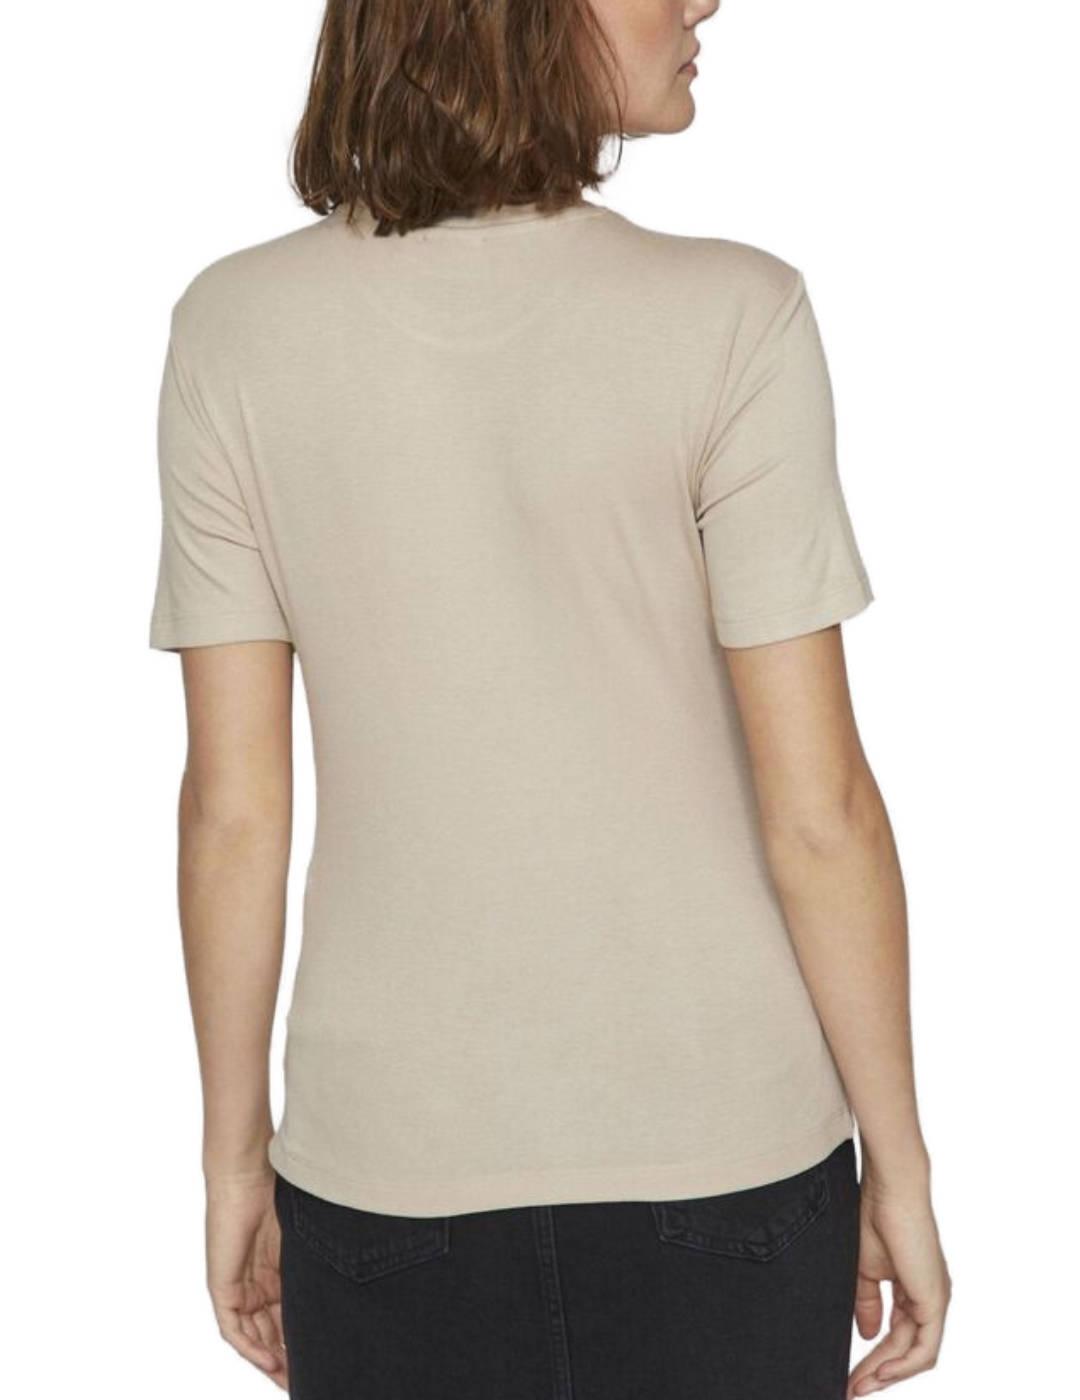 Camiseta básica Vila Alexia beige de manga corta para mujer